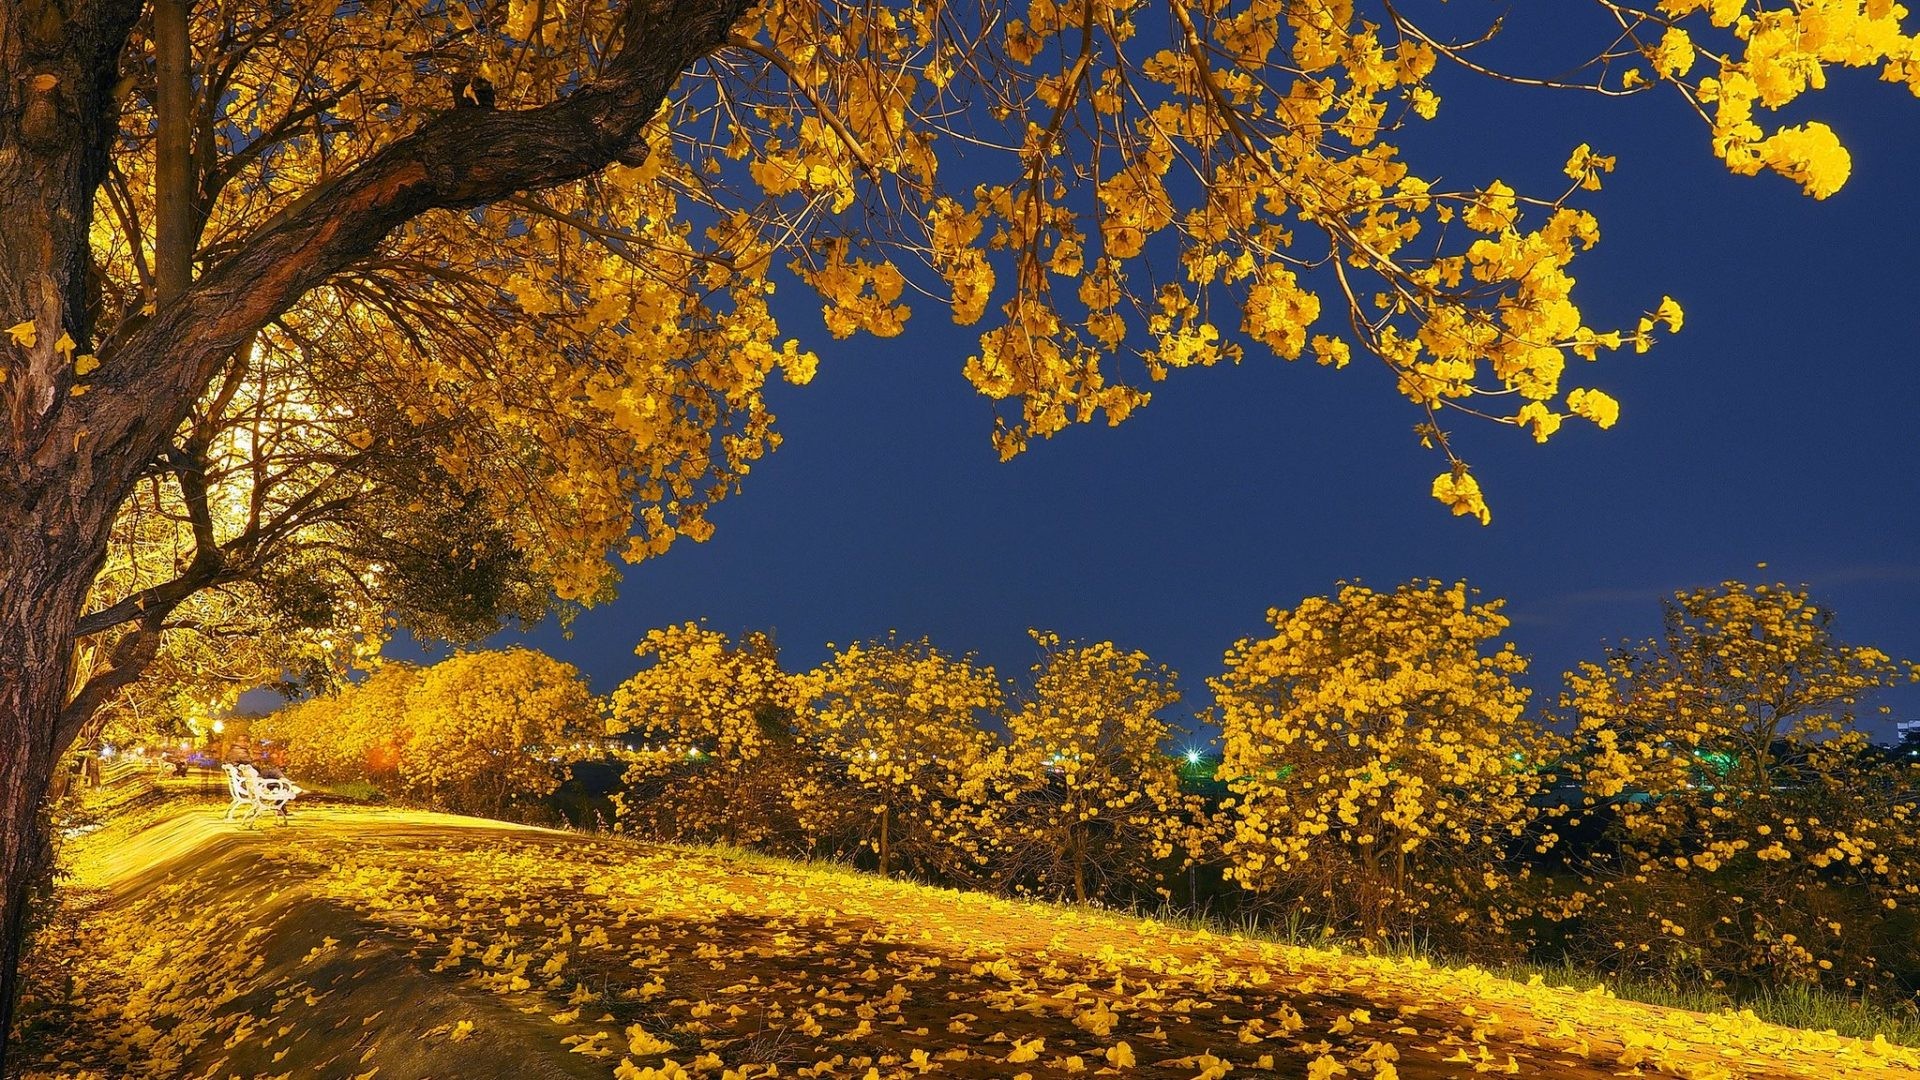 1920x1080 Falling Tag - Falling Nature Night Yellow Trees Sky Tree Autumn Leaves  Tonight Park Landscape Fall